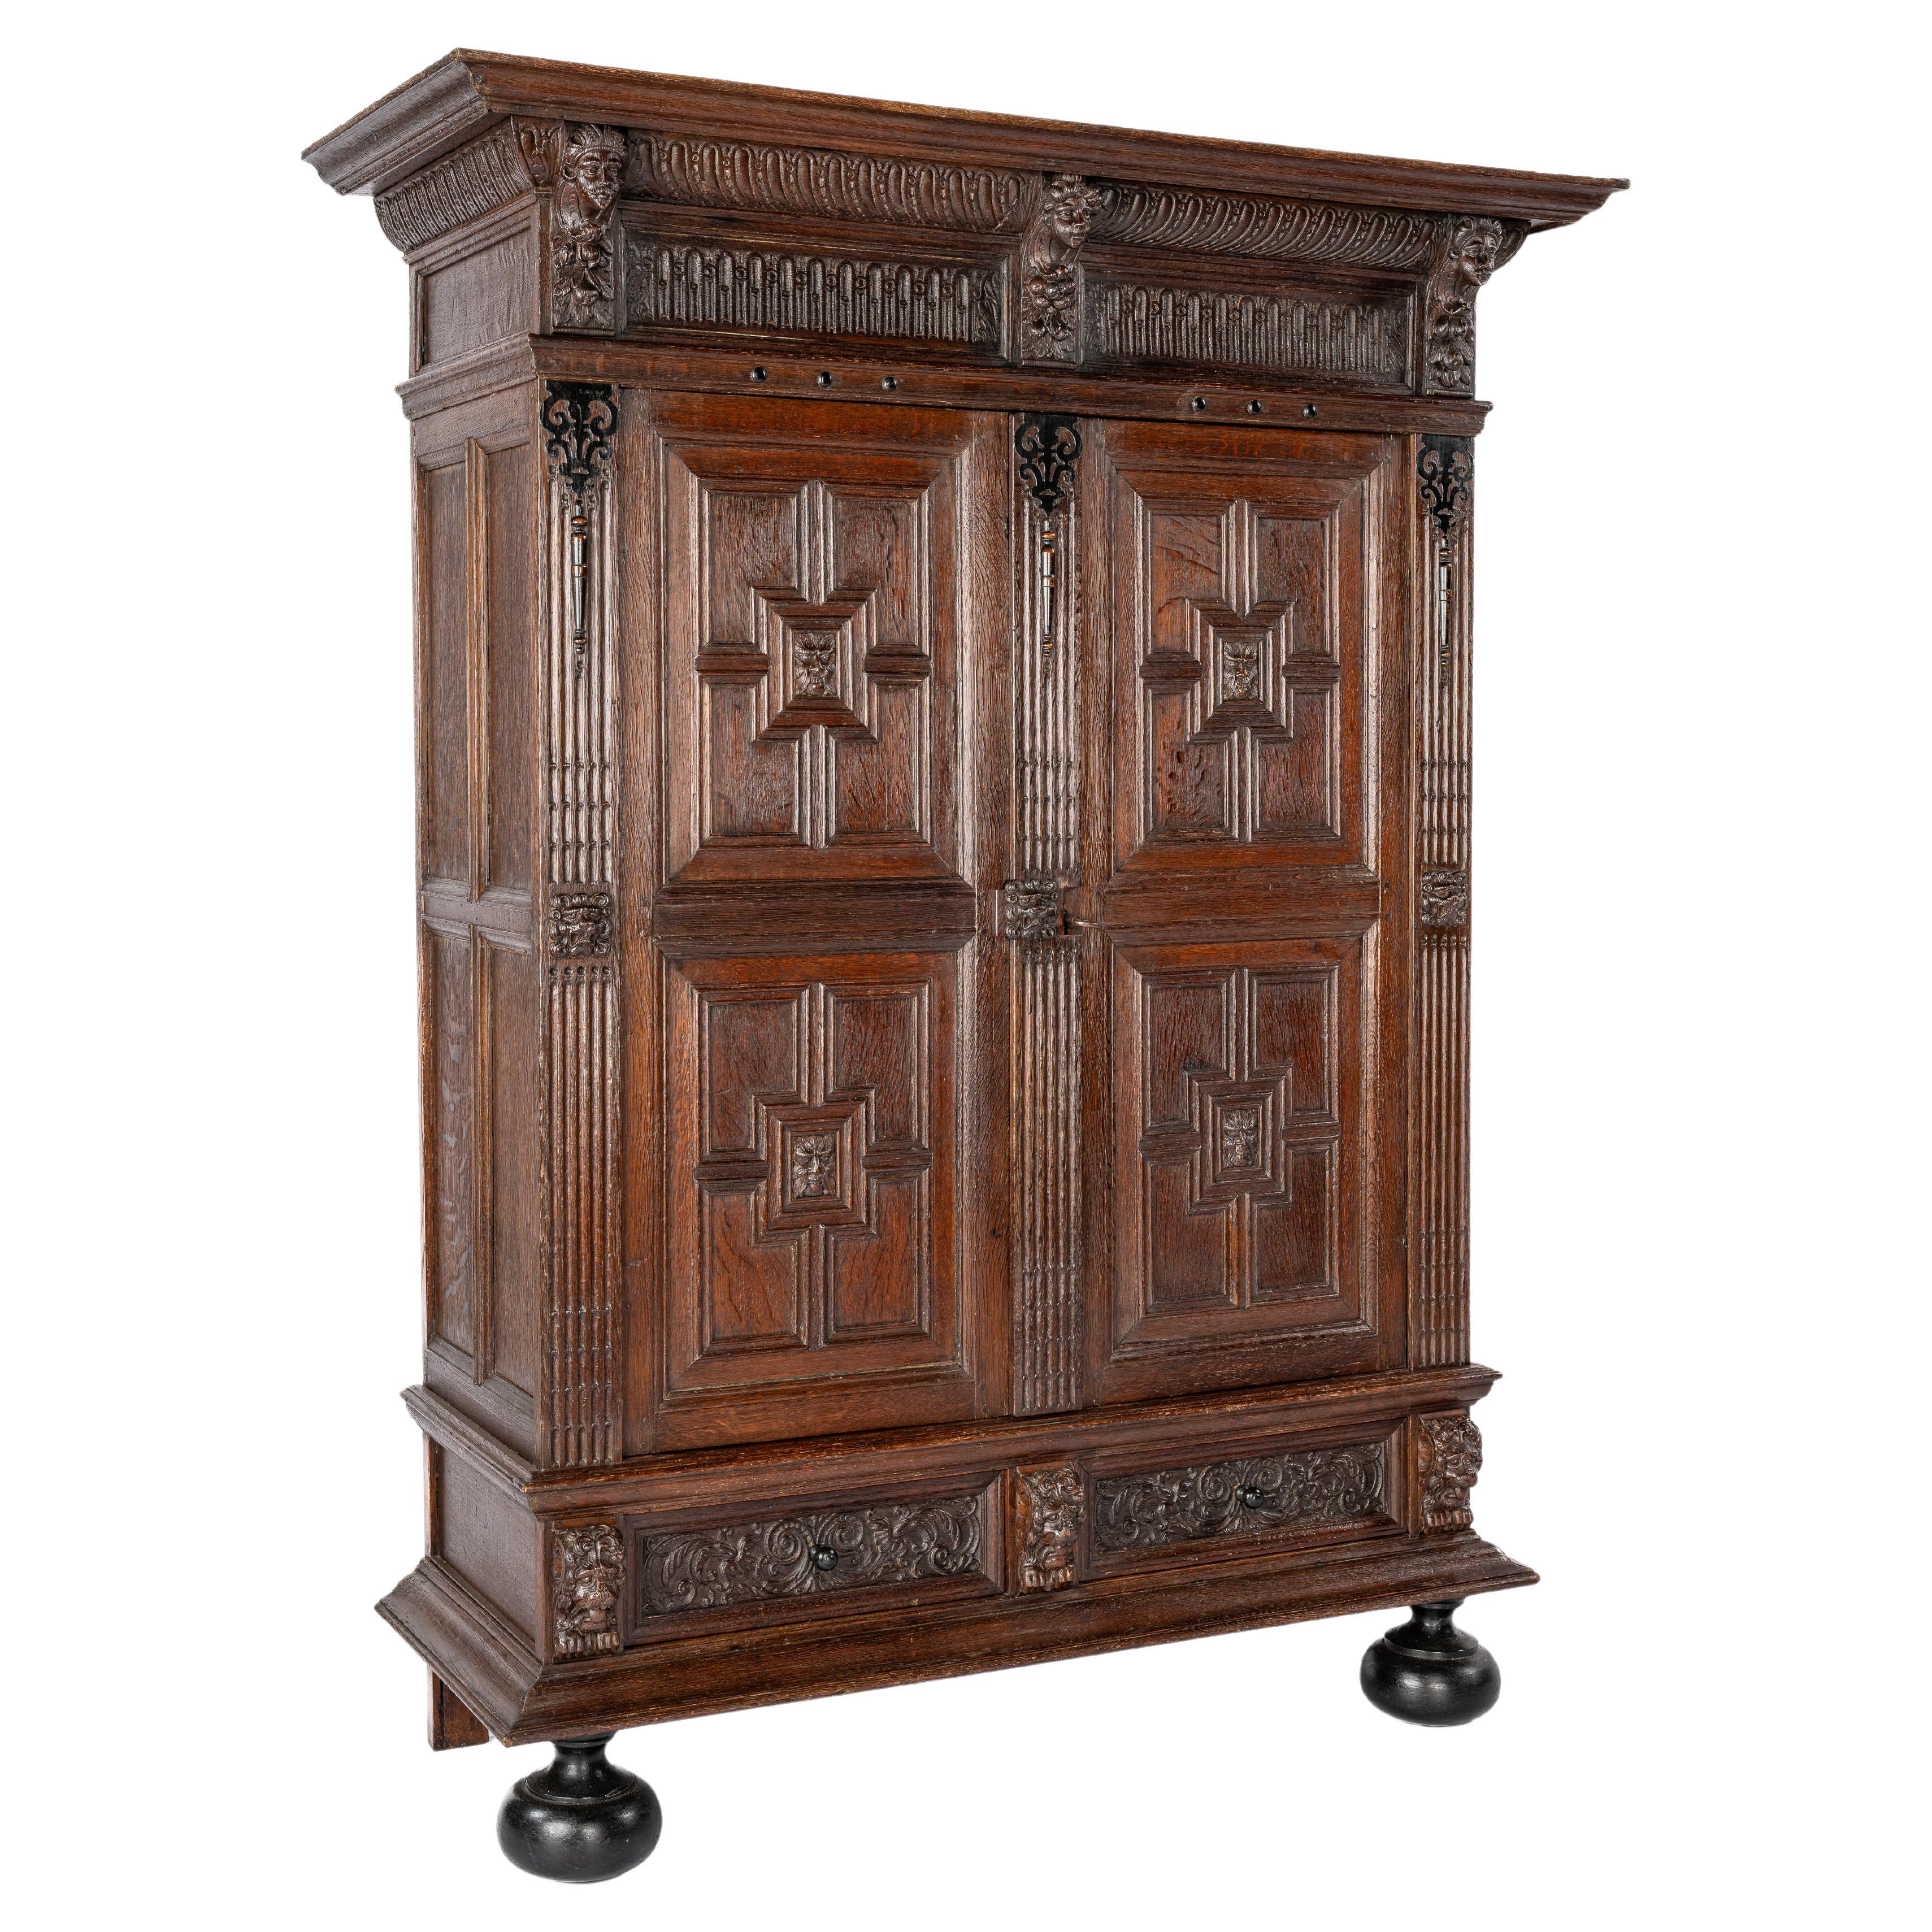 Antique 18th century Dutch Renaissancewarm brown oak two door cabinet